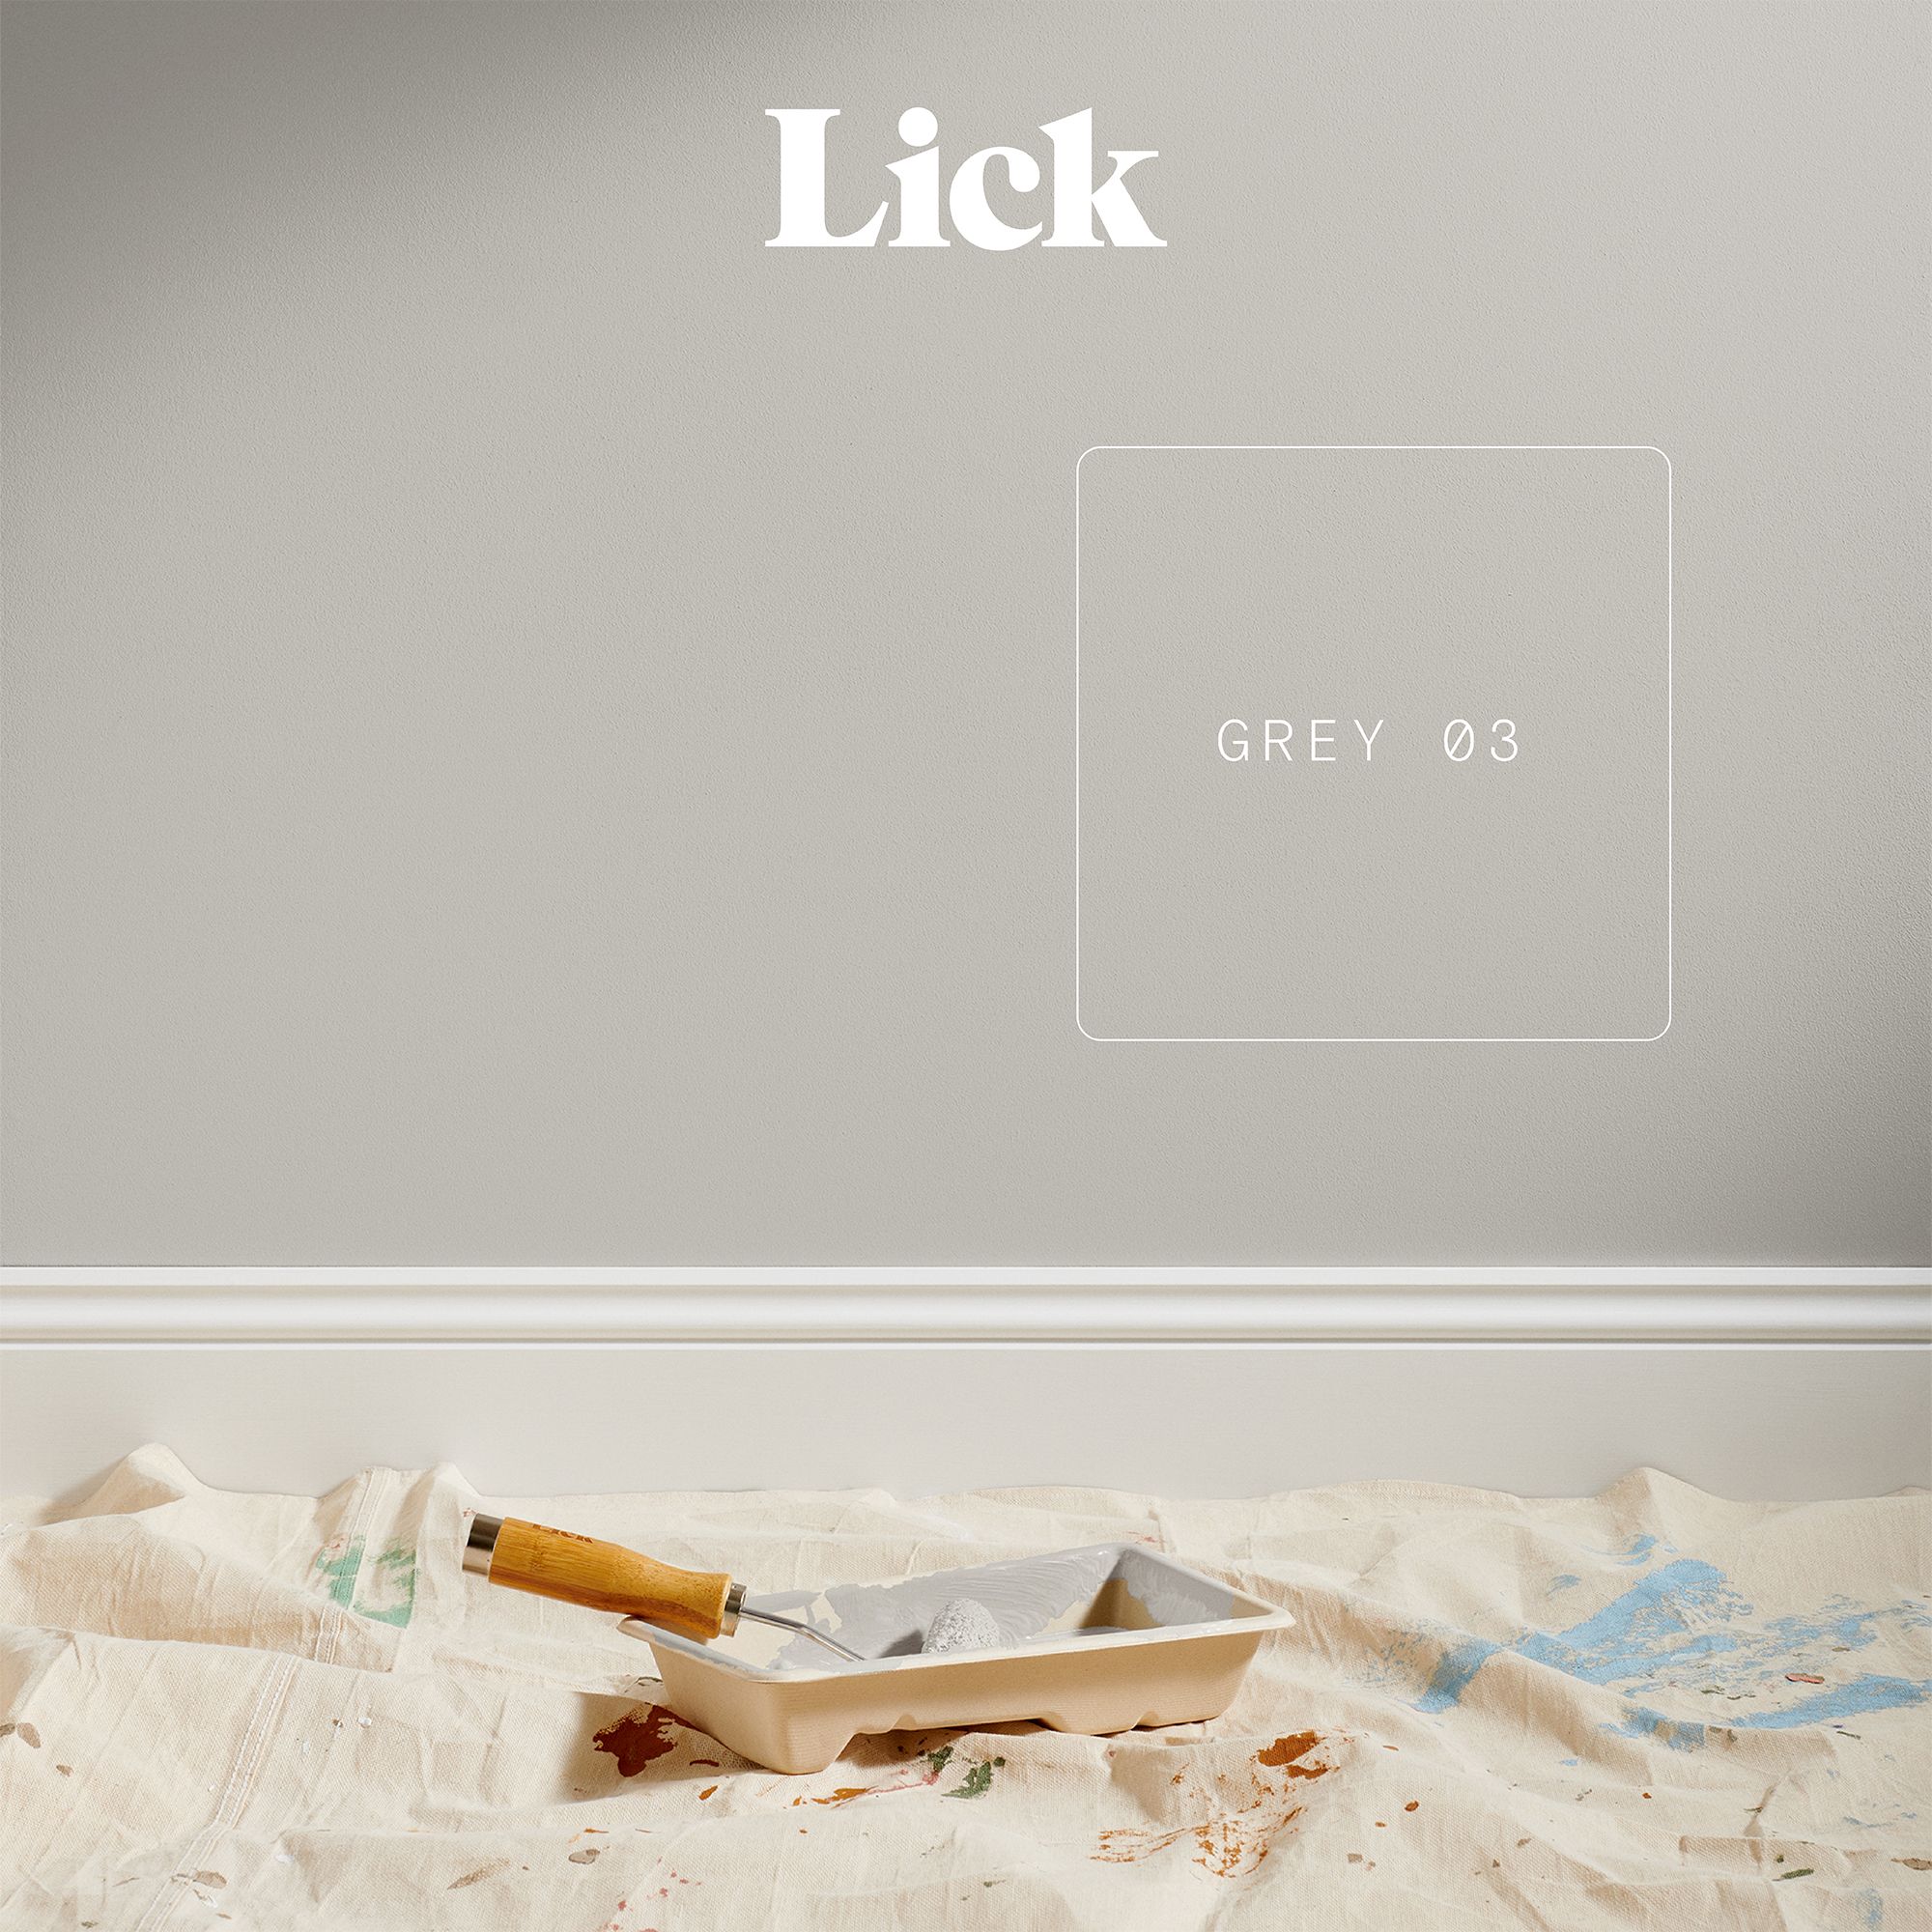 Lick Grey 03 Peel & stick Tester